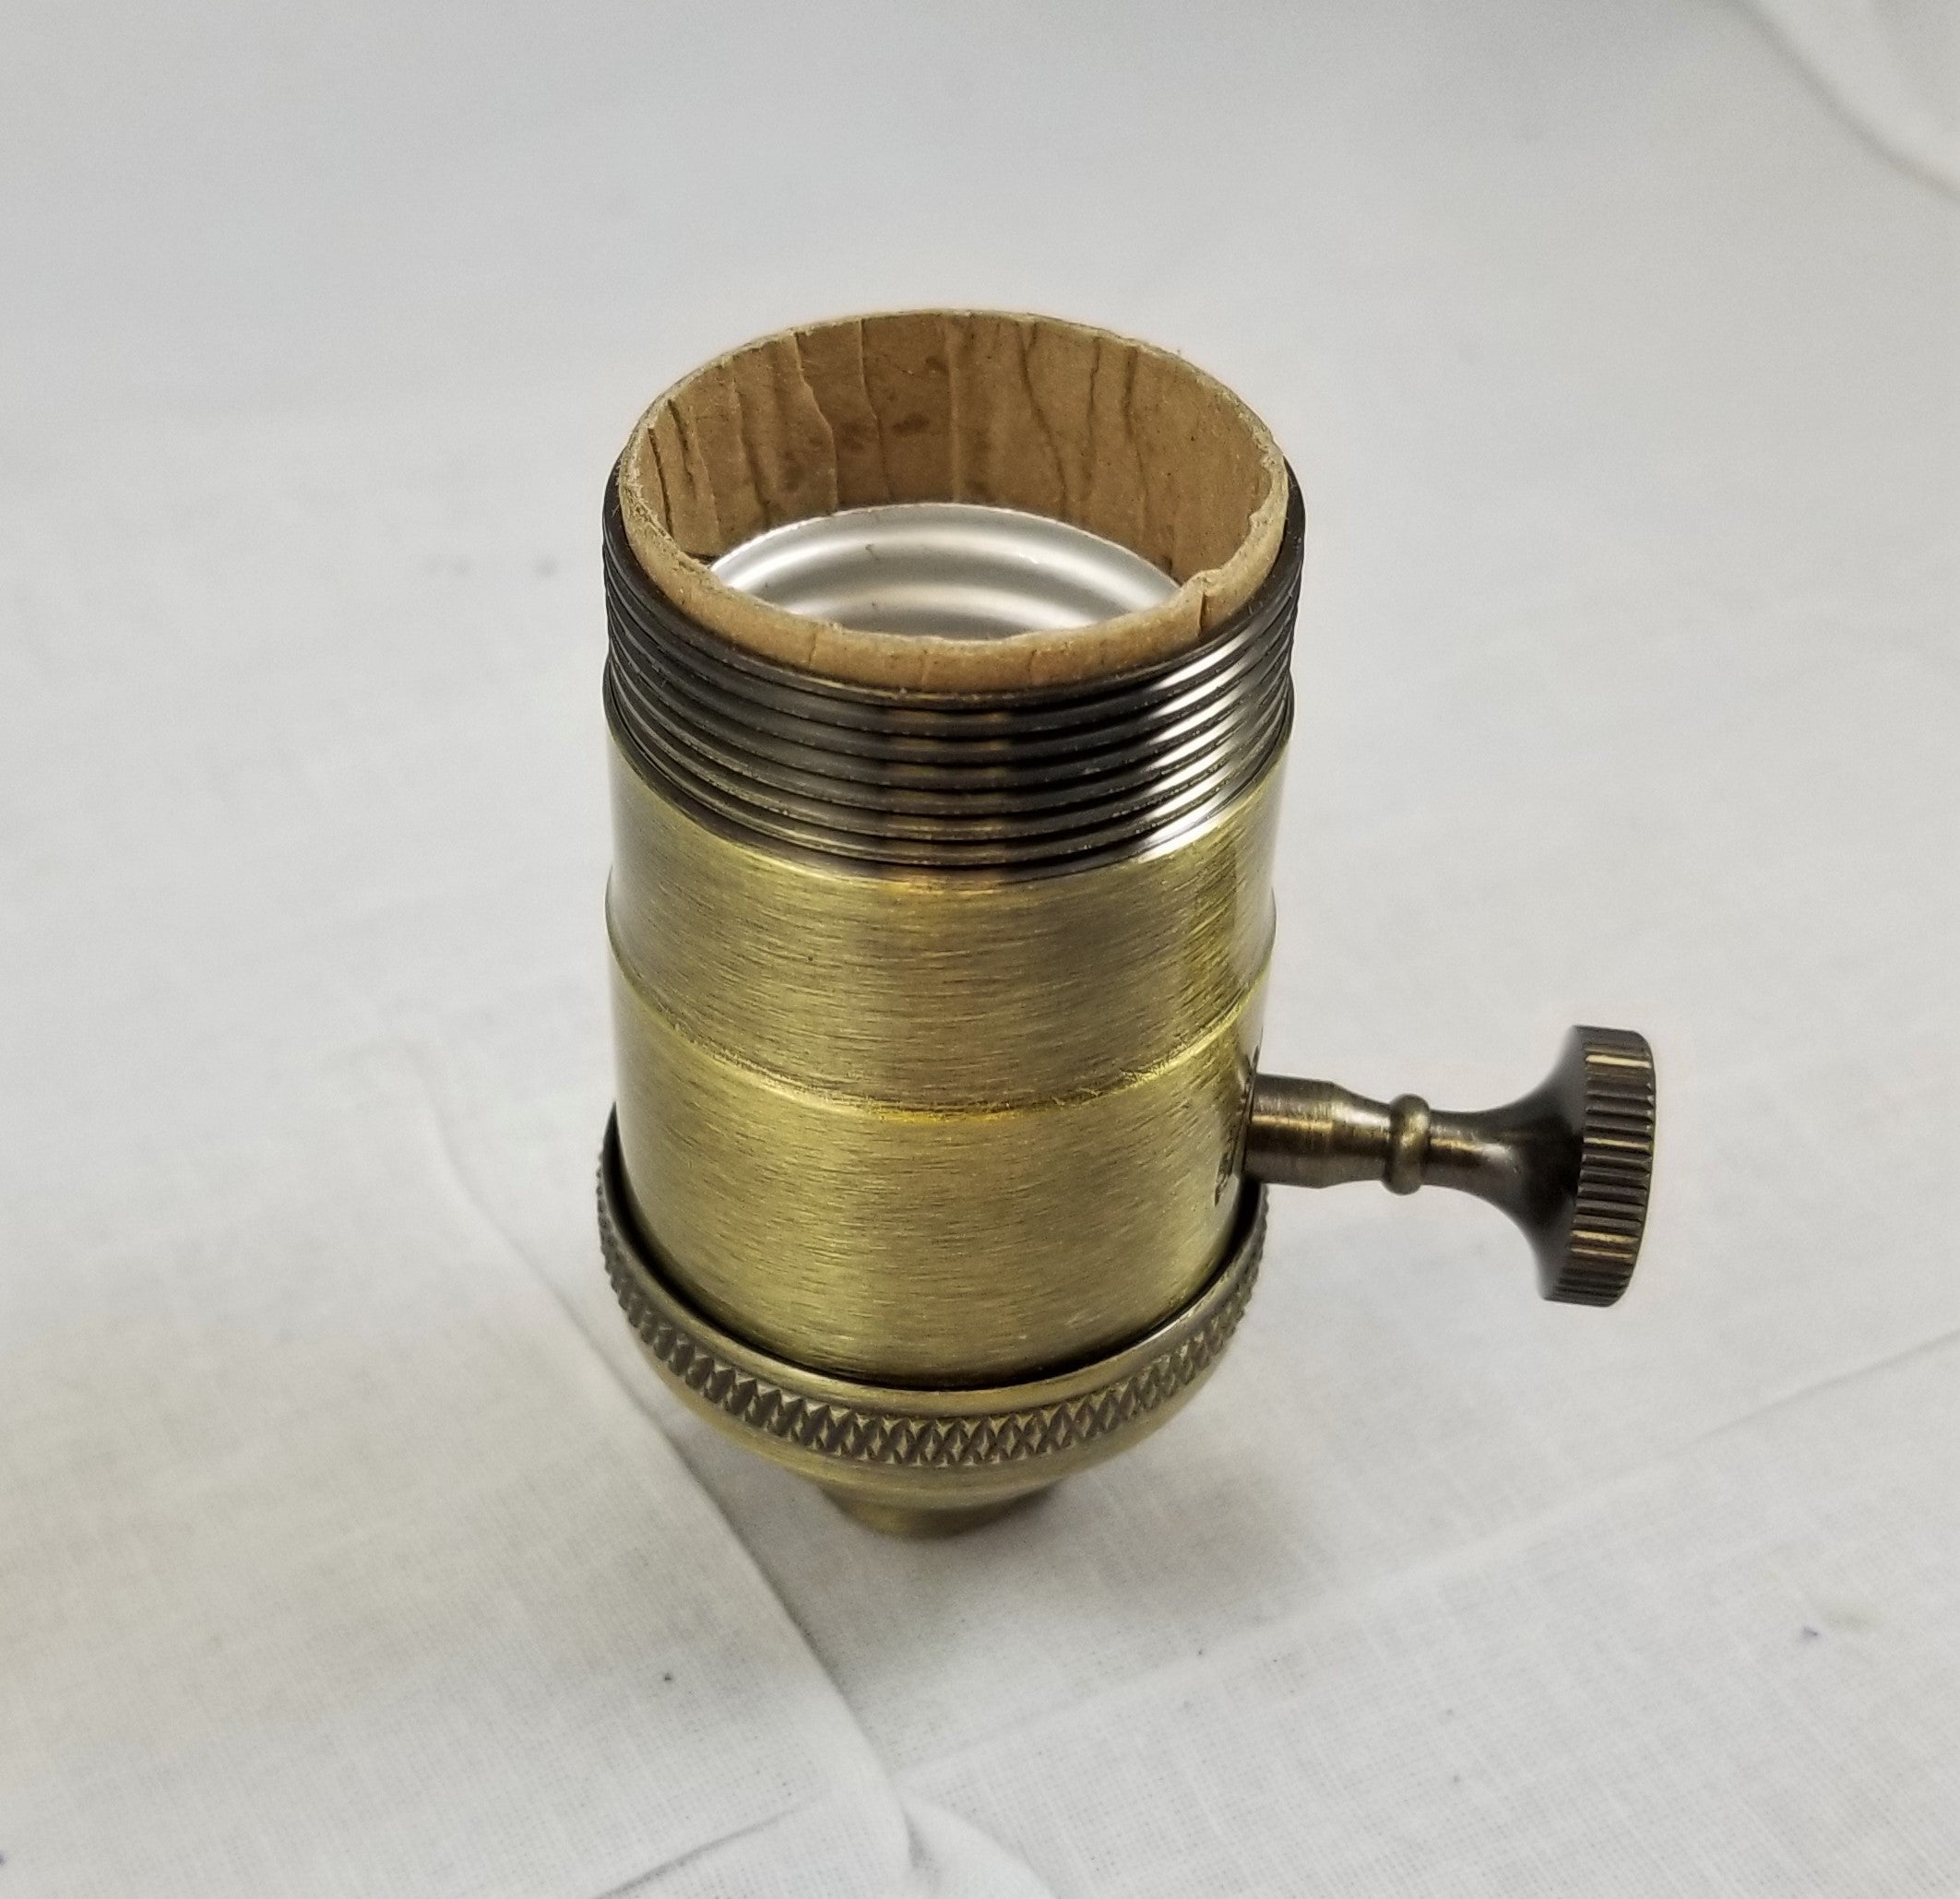 Uno Threaded Heavy Duty Antique Brass 3-Way Turn Knob Socket with a Screw On Cap